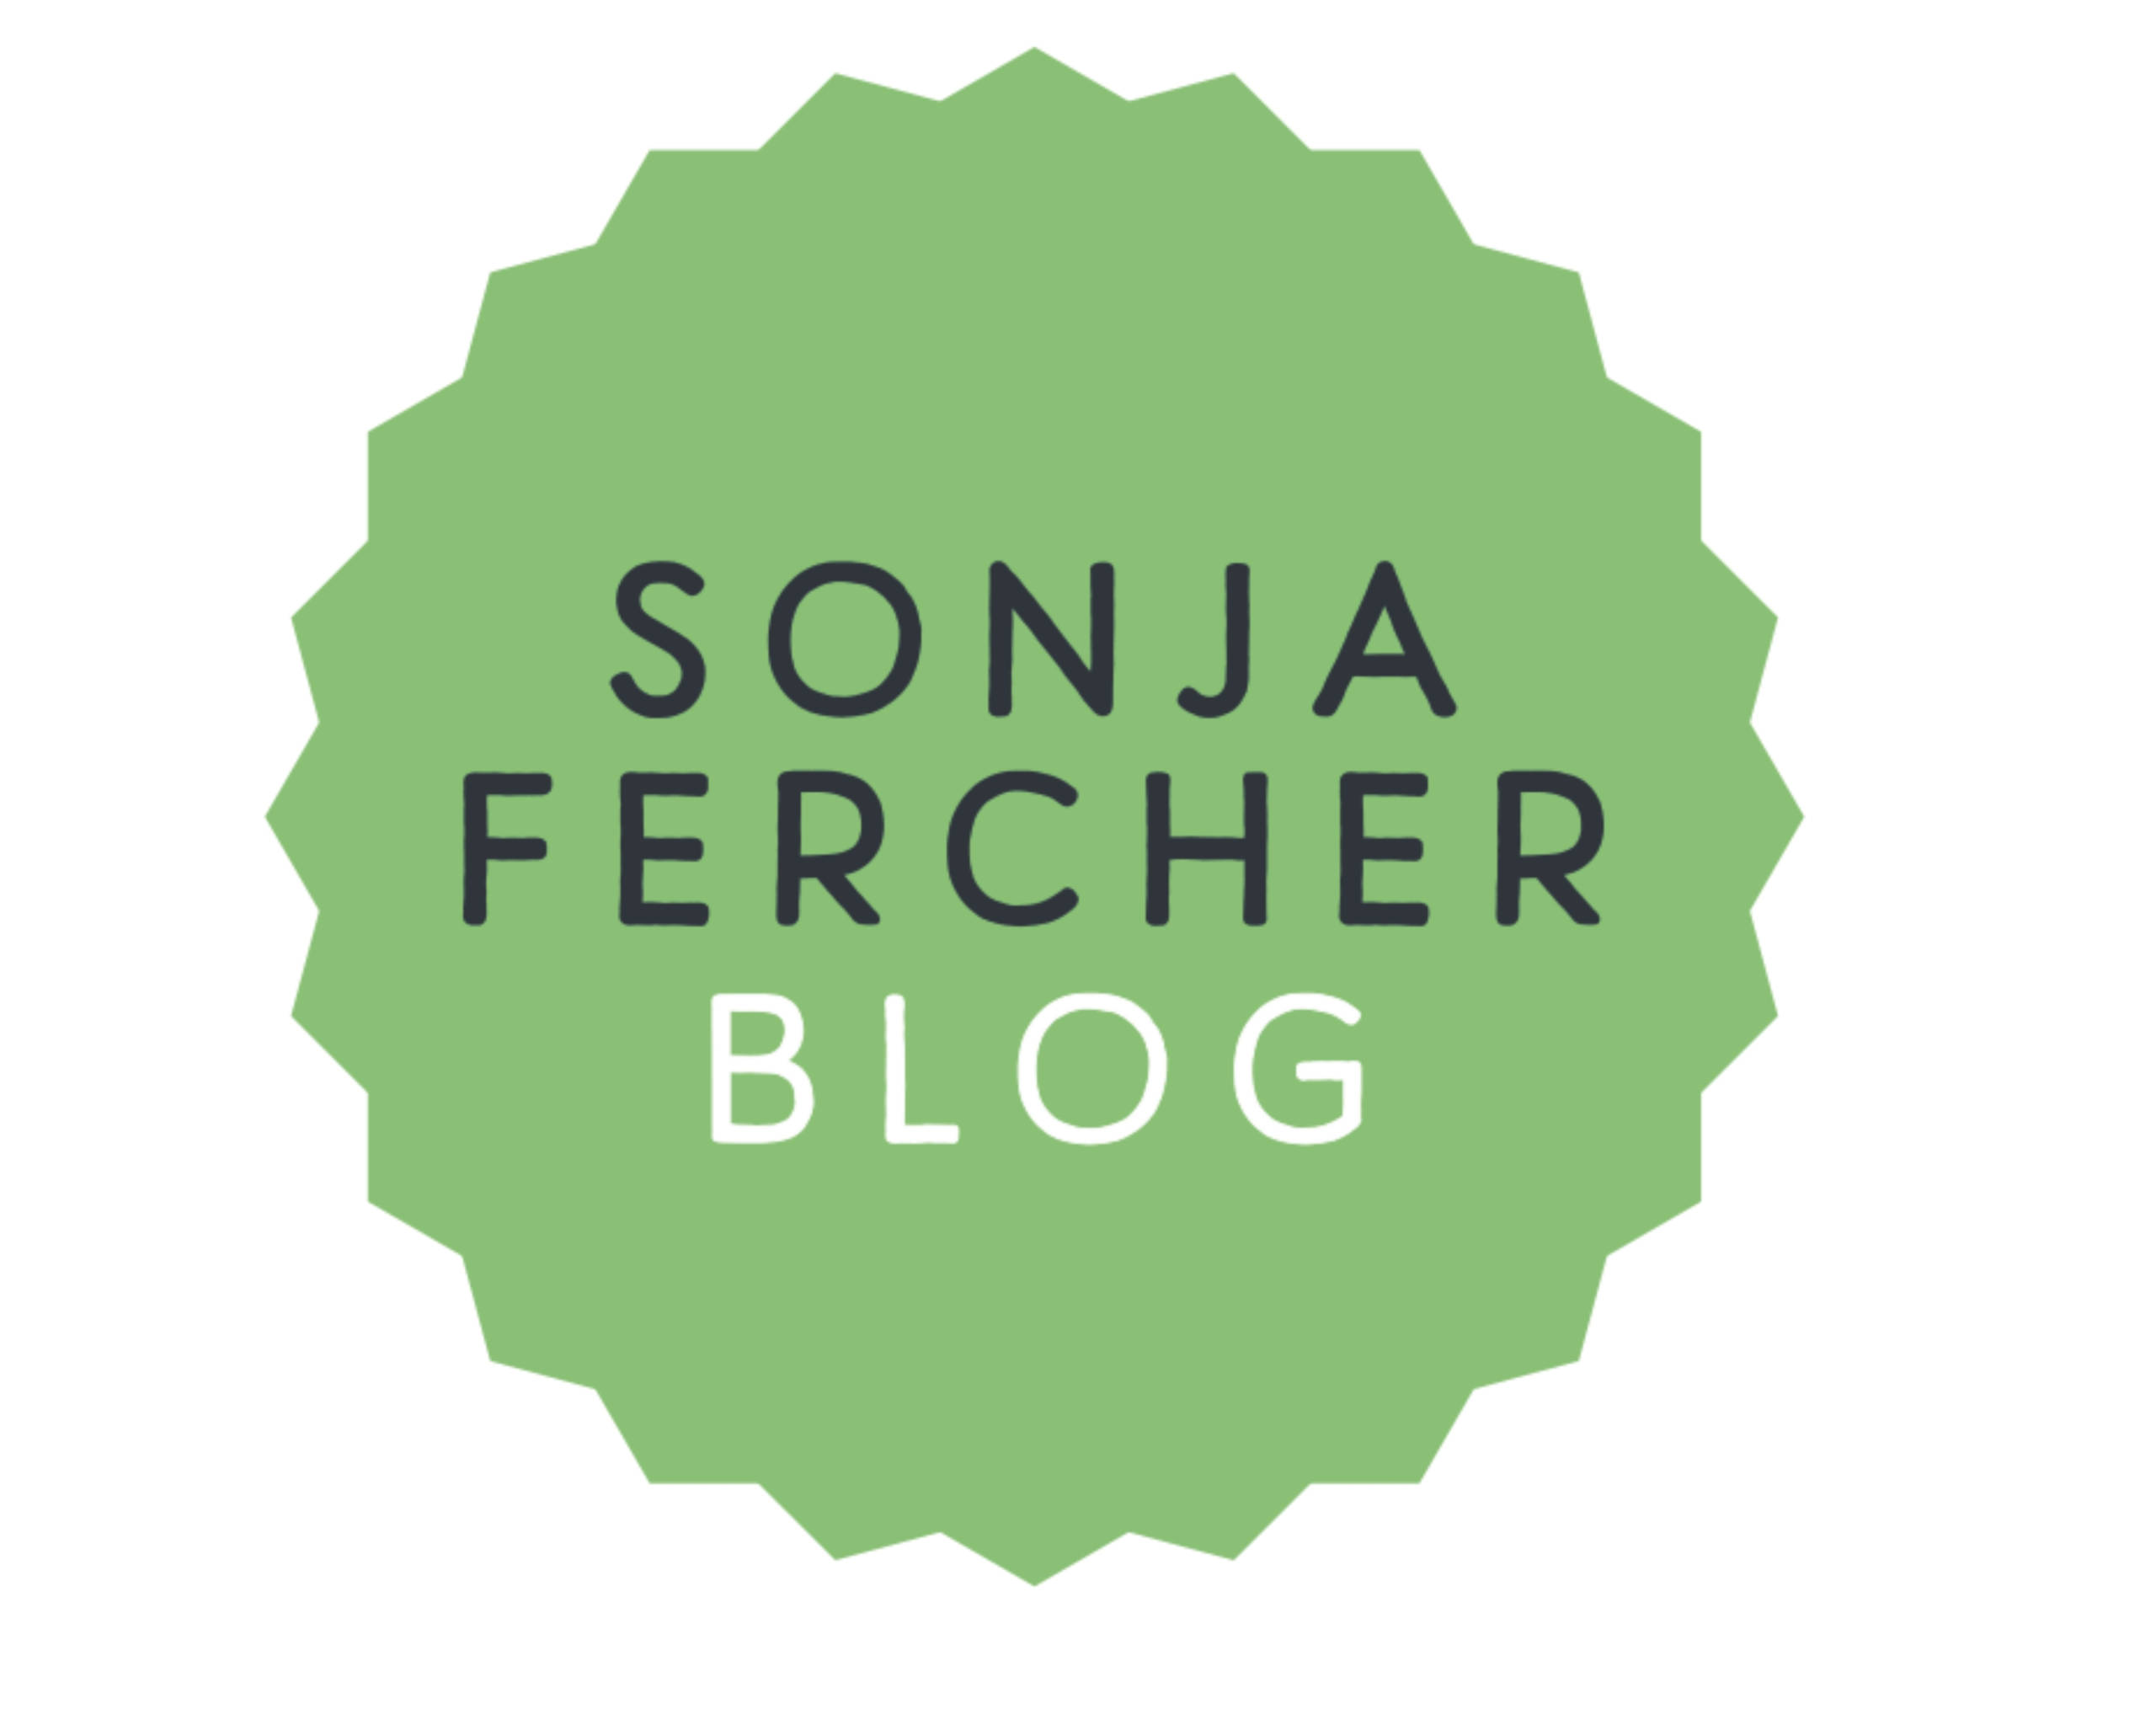 Sonja Fercher